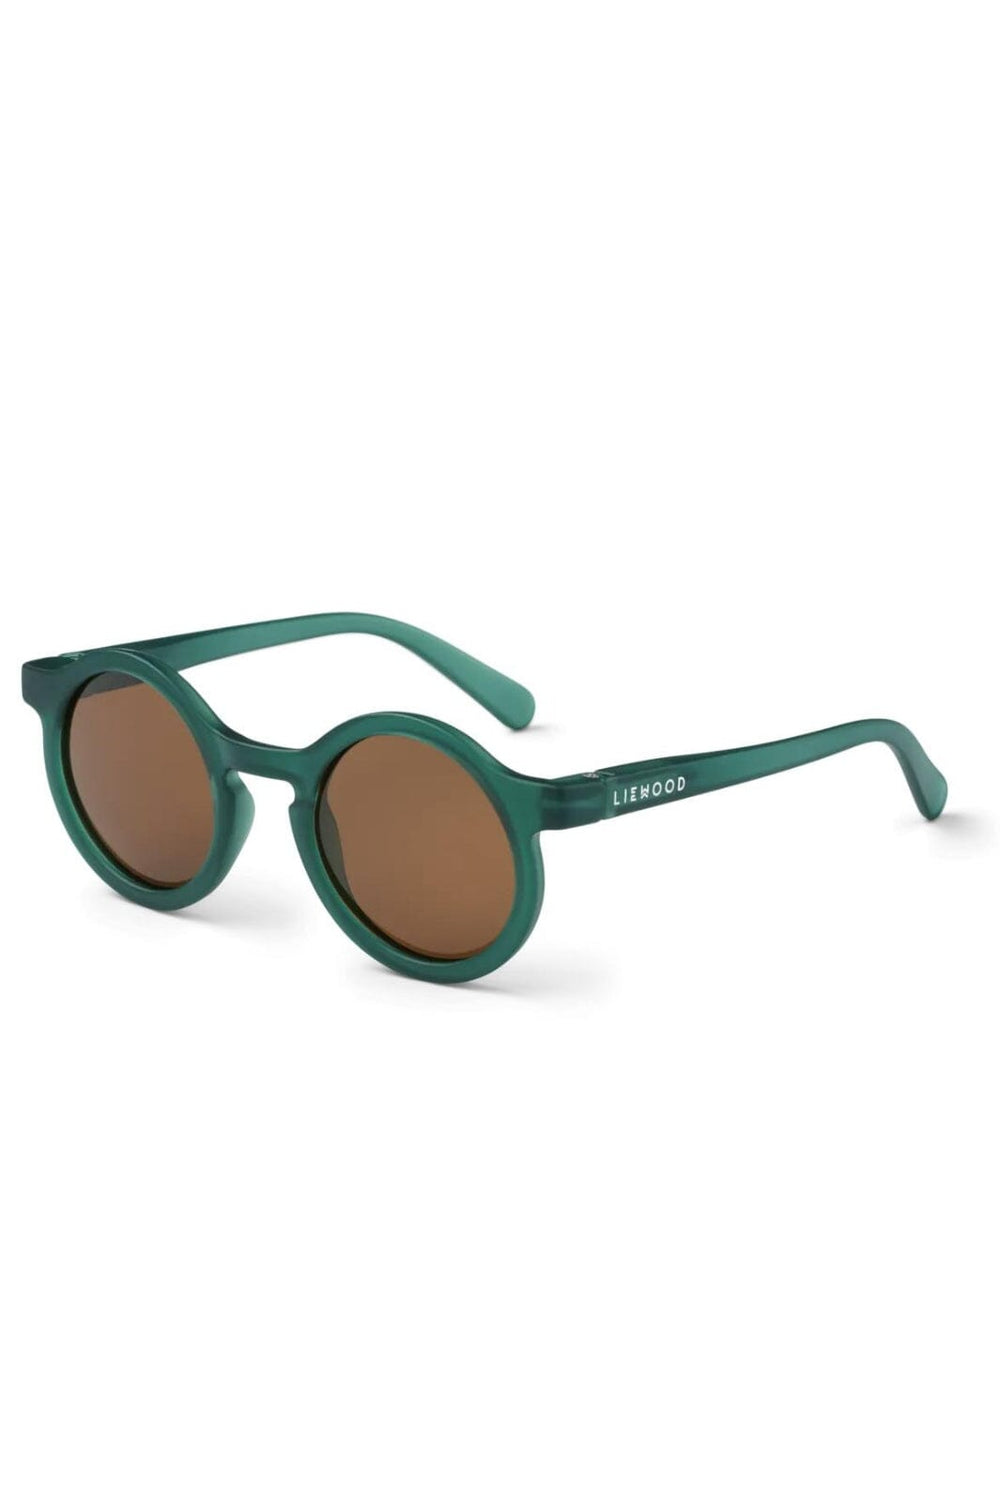 Liewood - Darla Sunglasses 1-3 Y - Garden Green Solbriller 